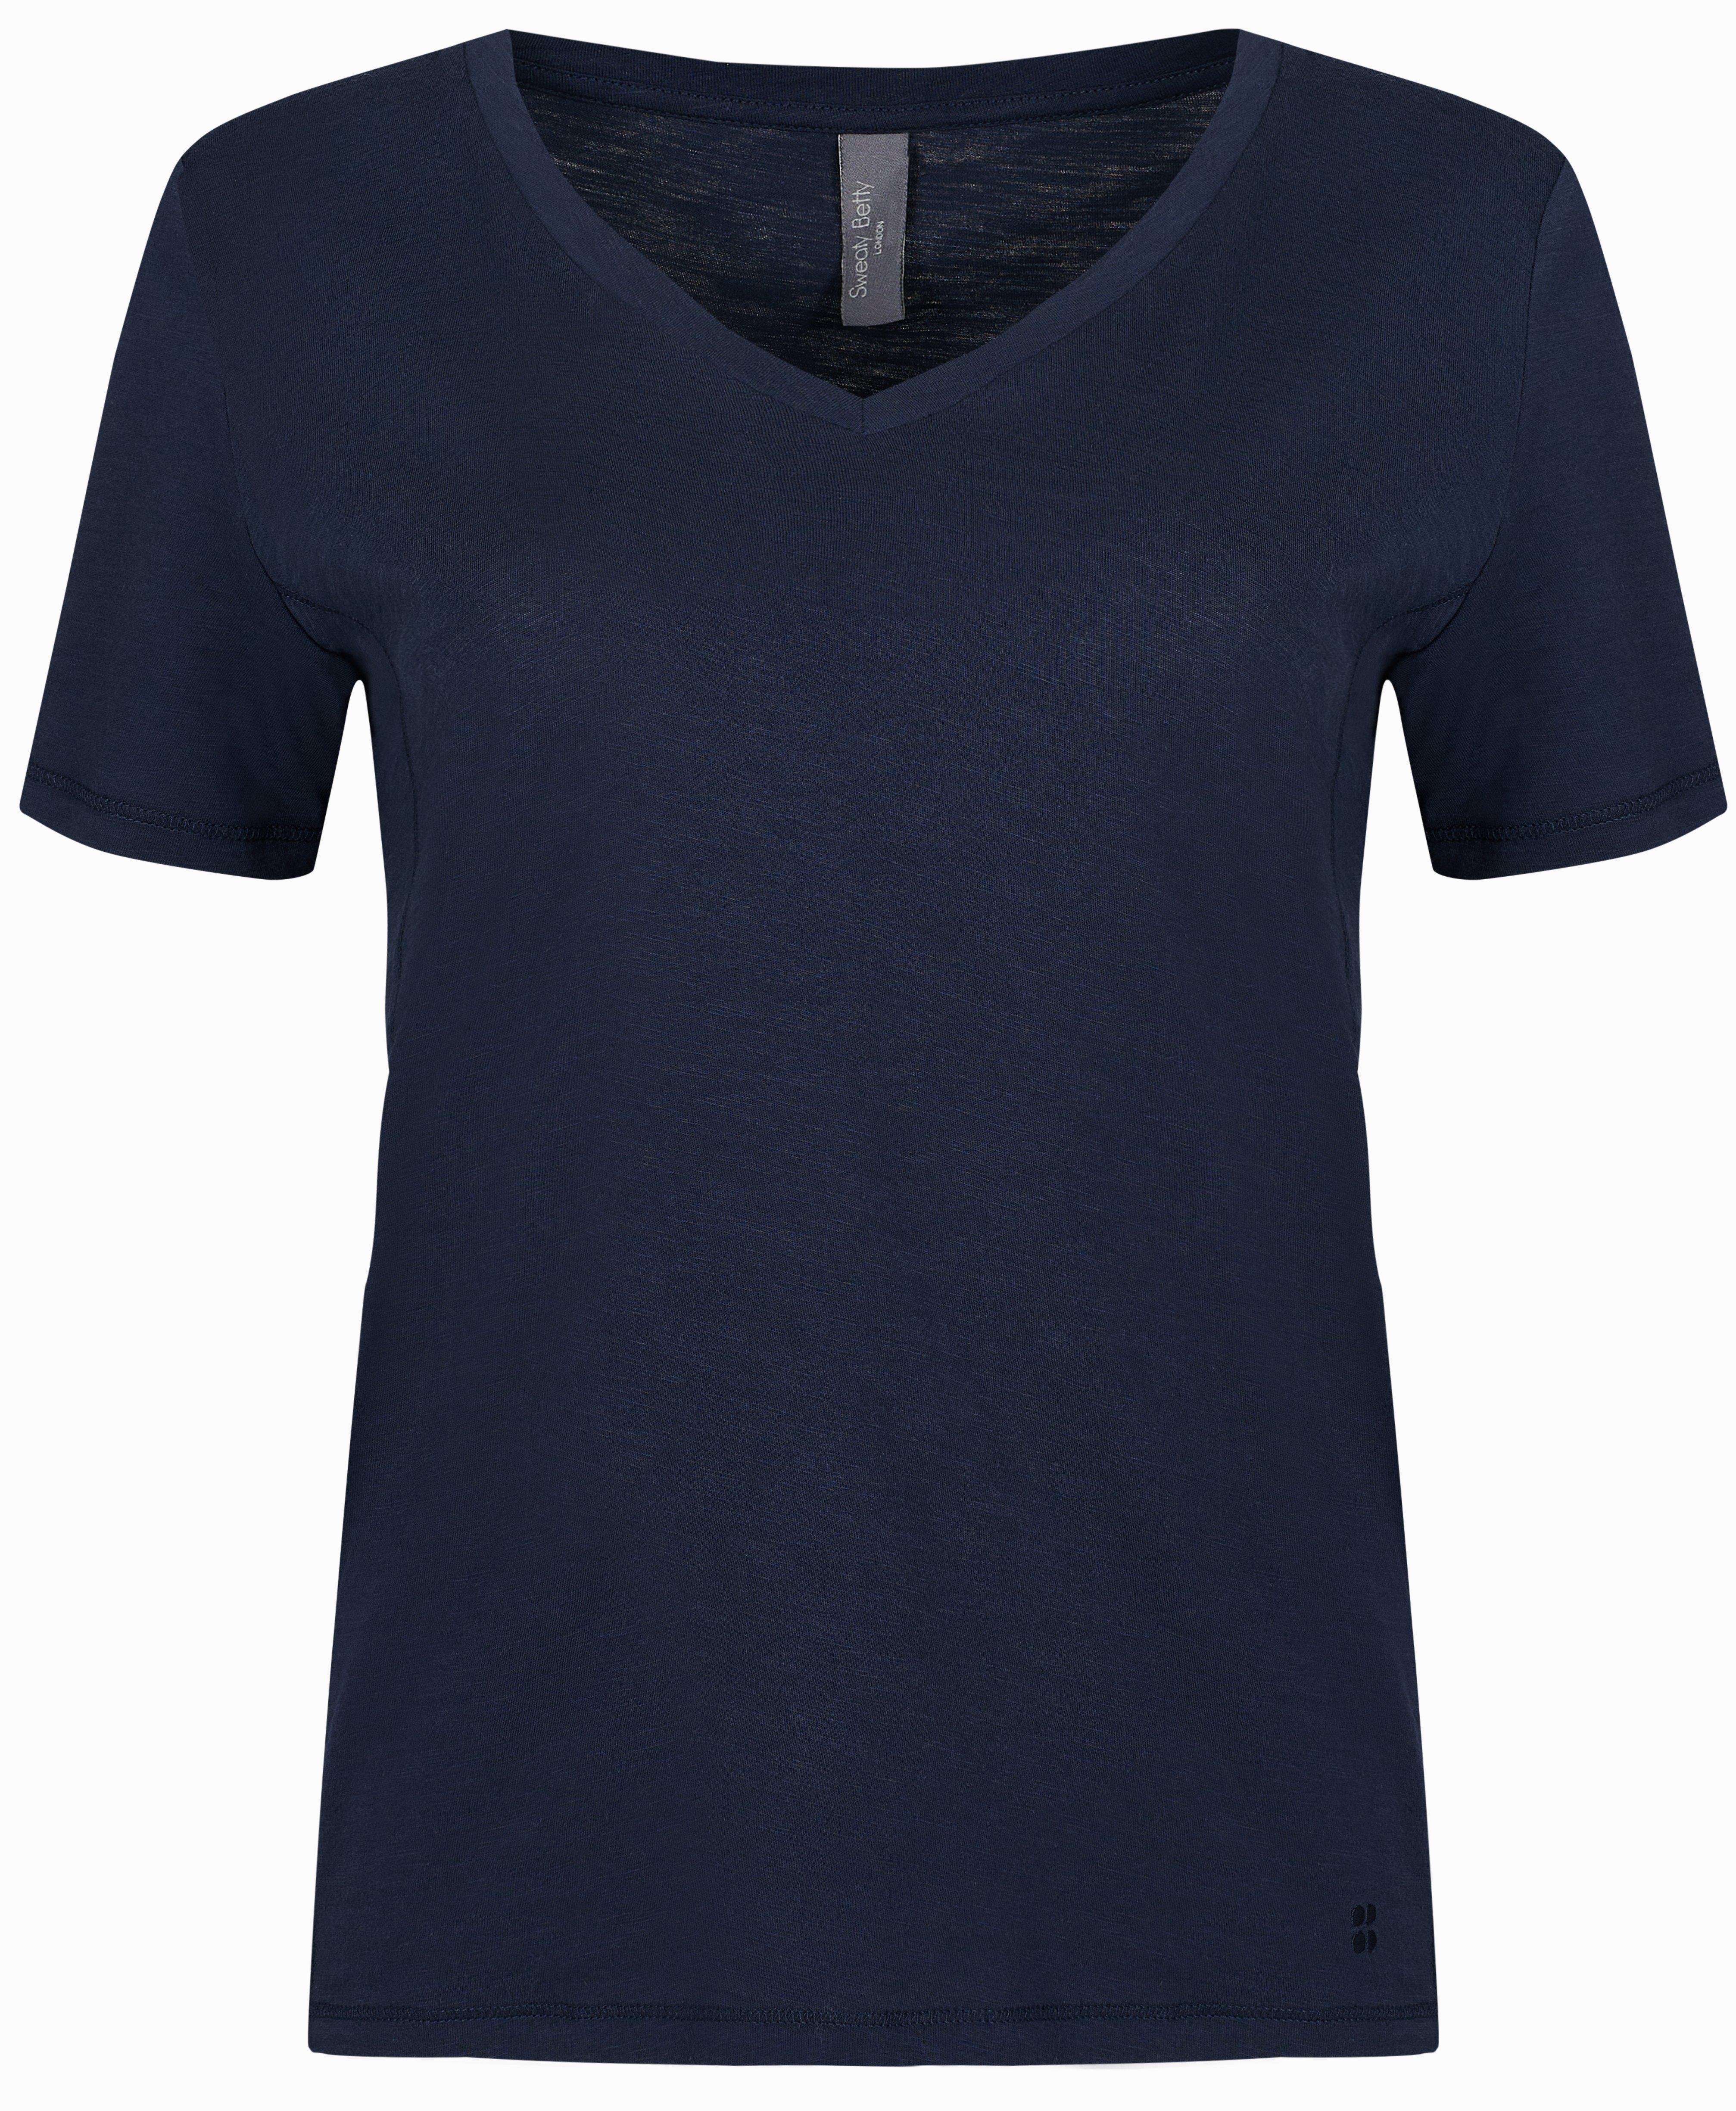 Refresh V-Neck Tee - Navy Blue, Women's T-Shirts